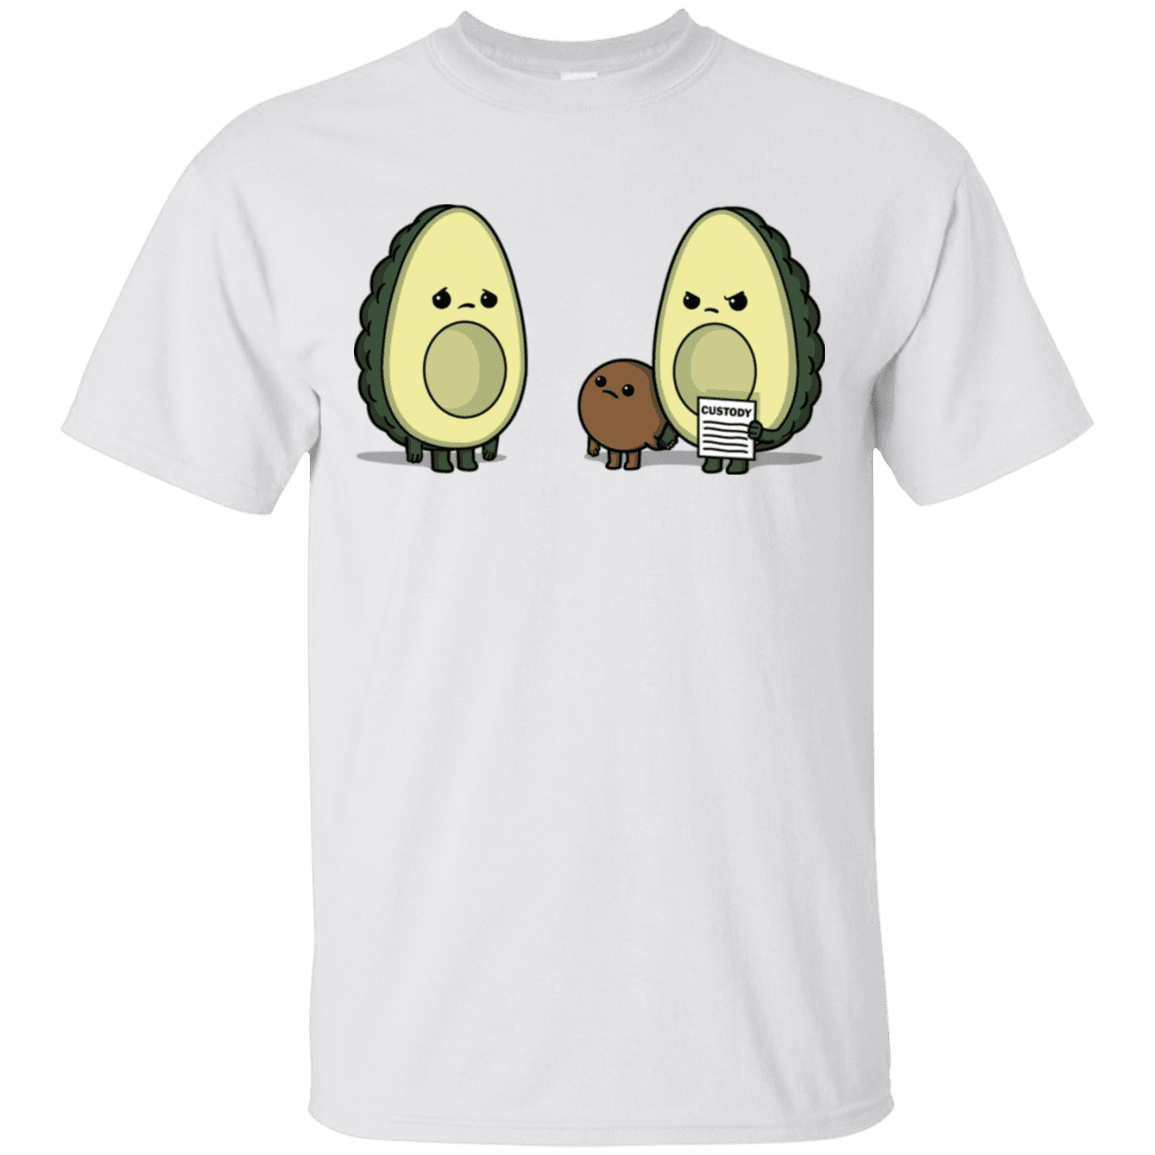 T-Shirts White / S Bone Custody T-Shirt